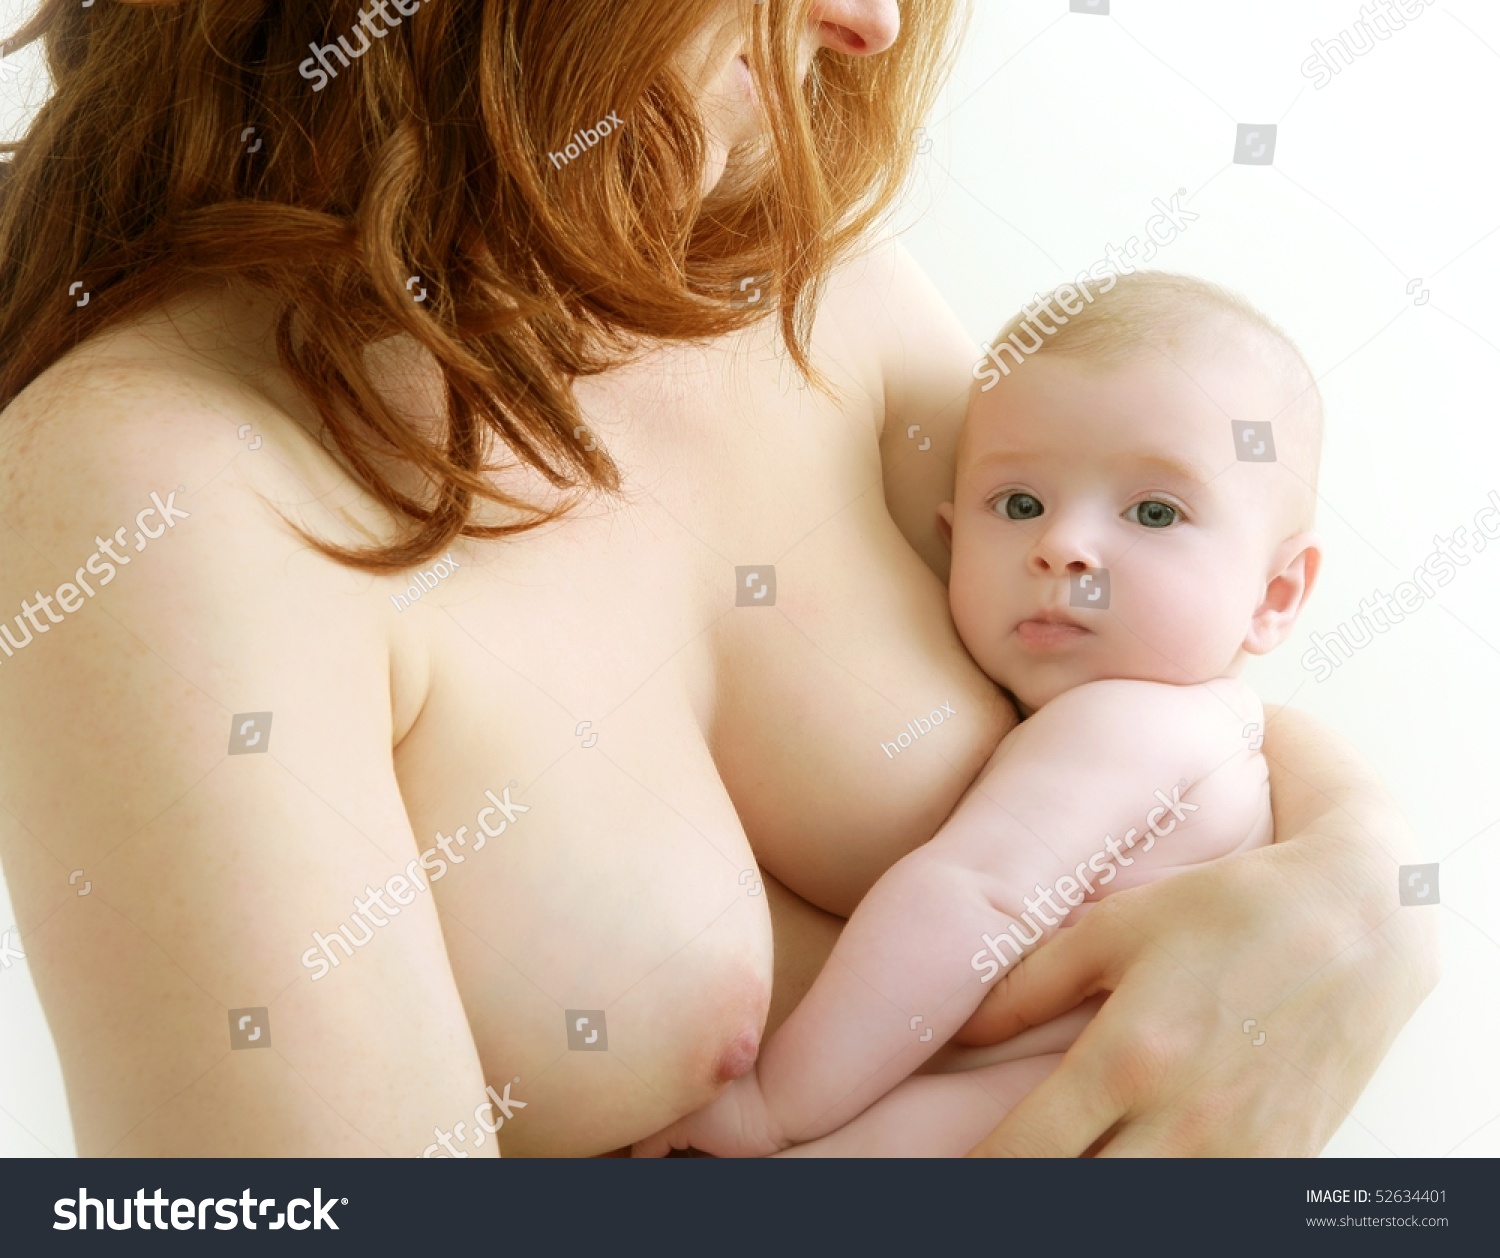 Baby Nude Pics 9